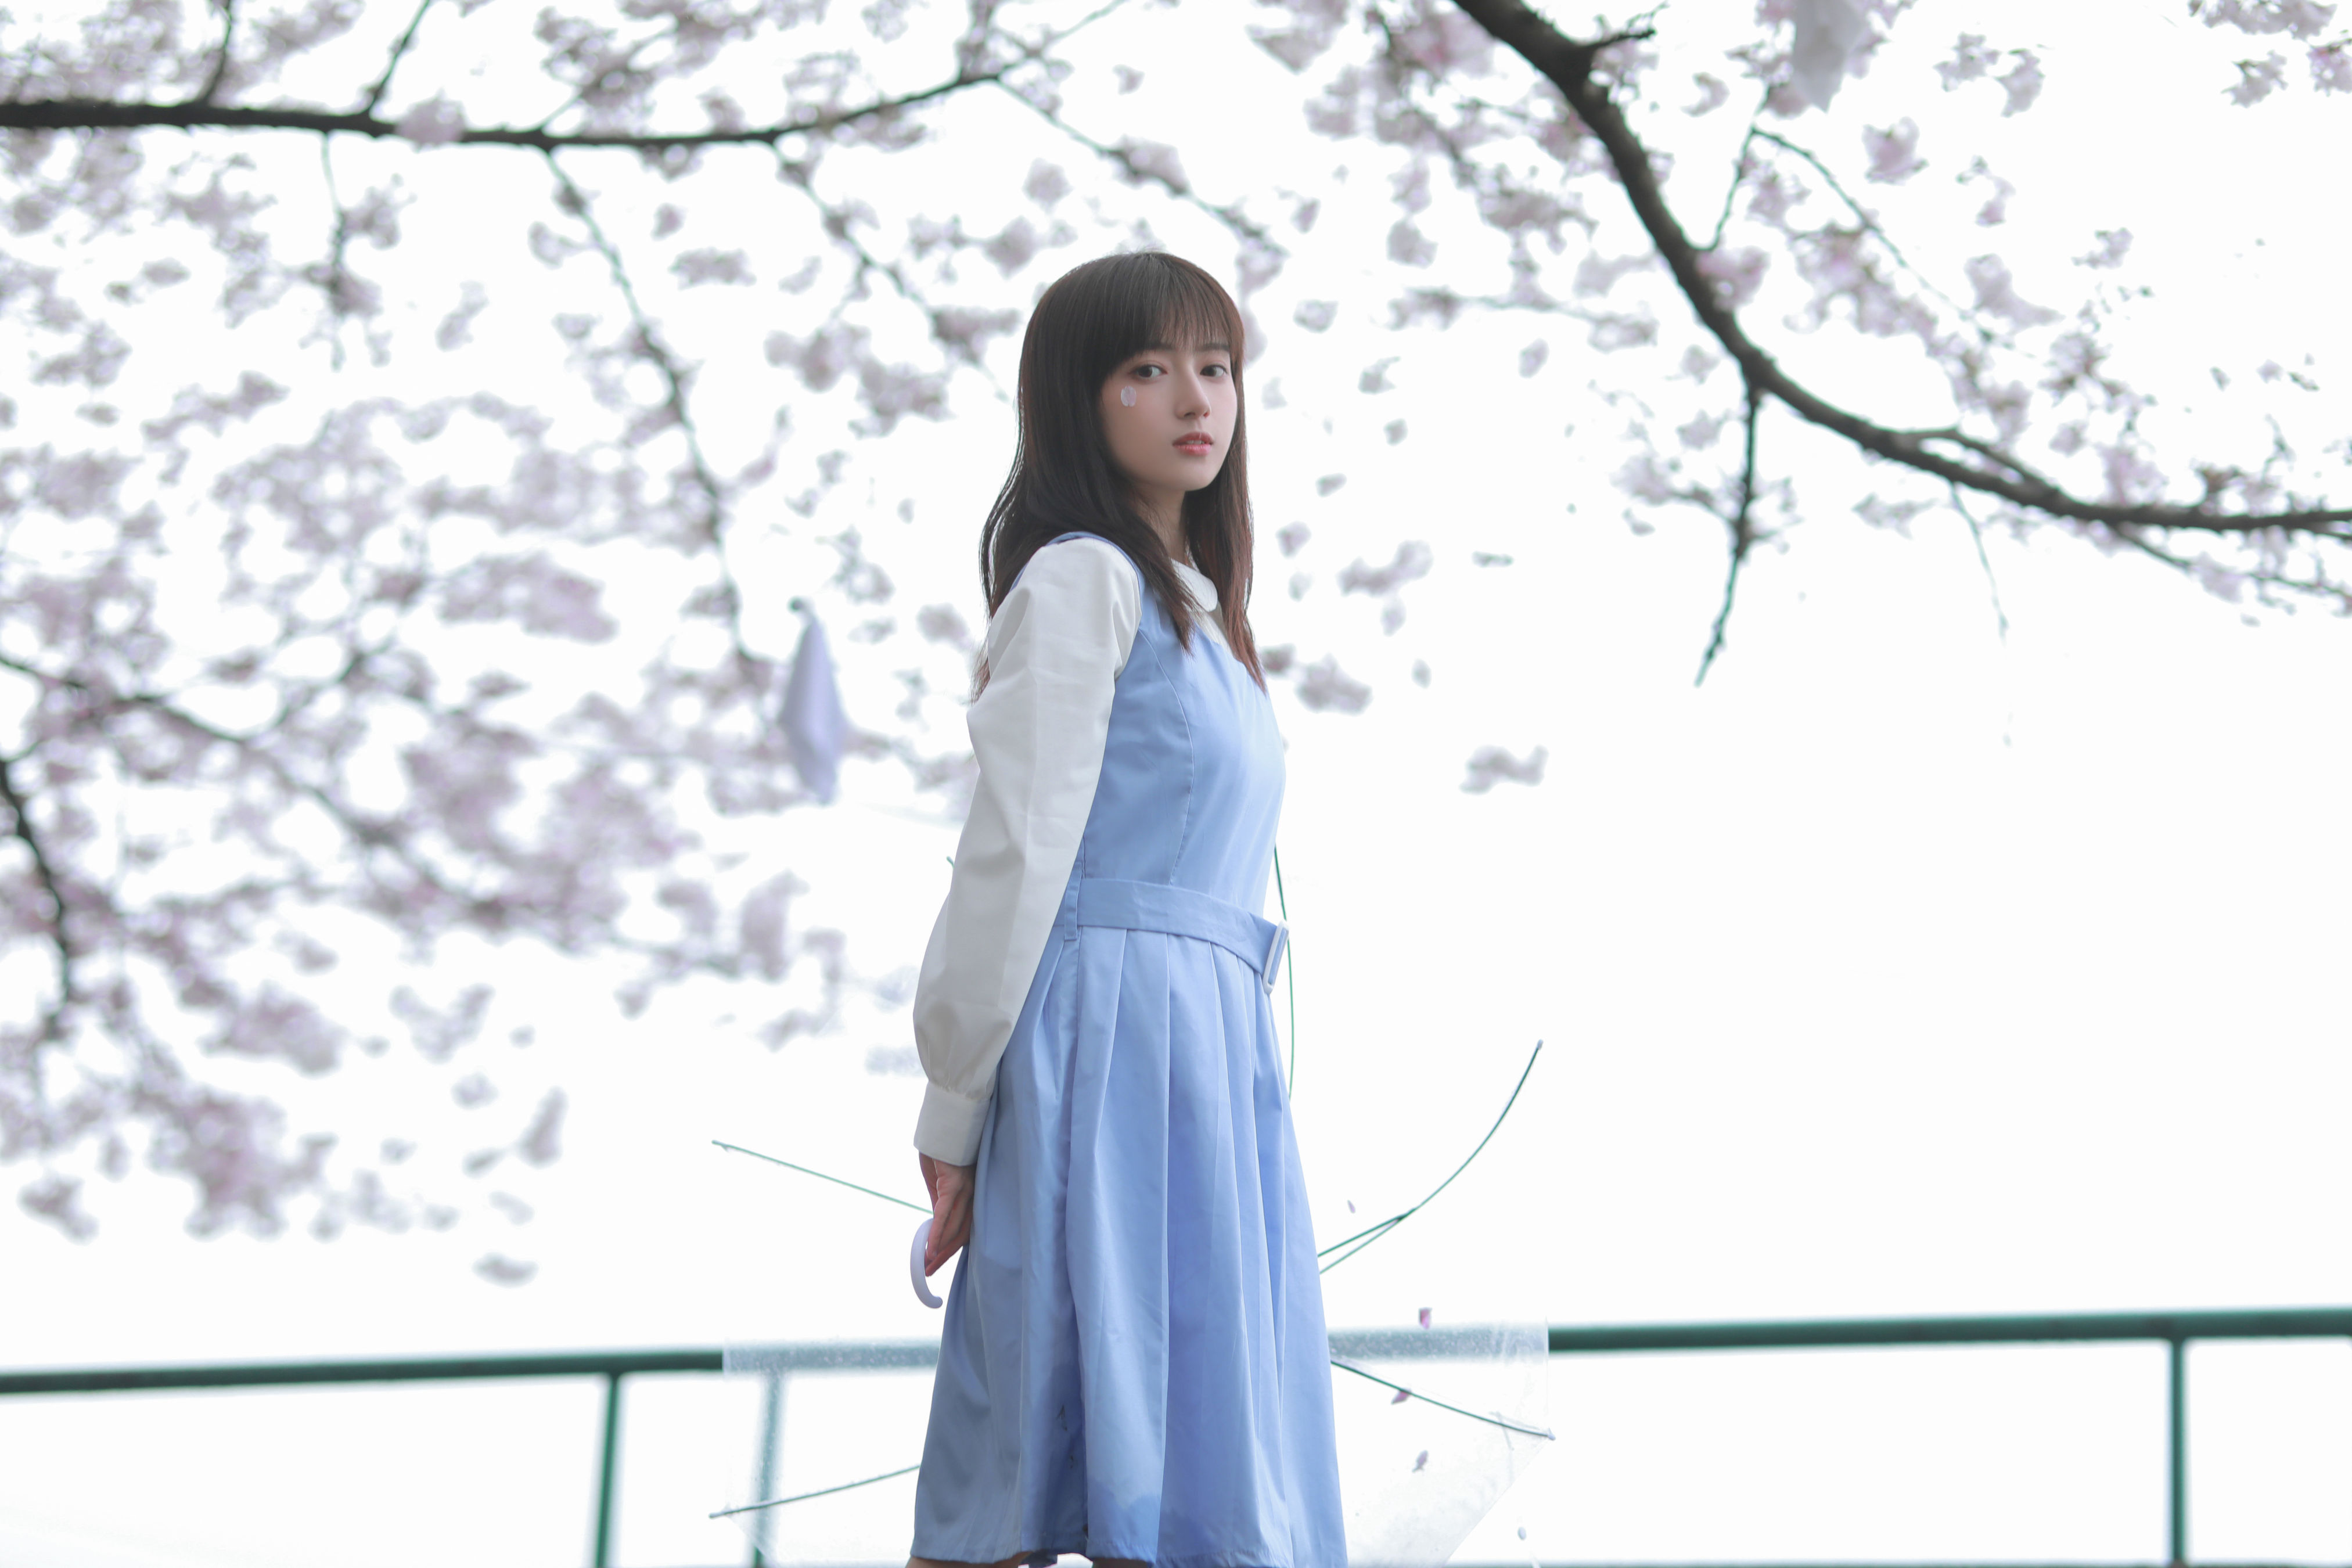 Asian Women Model Women Outdoors Urban Brunette Standing Dress Blue Dress Blue Clothing Looking At V 4050x2700